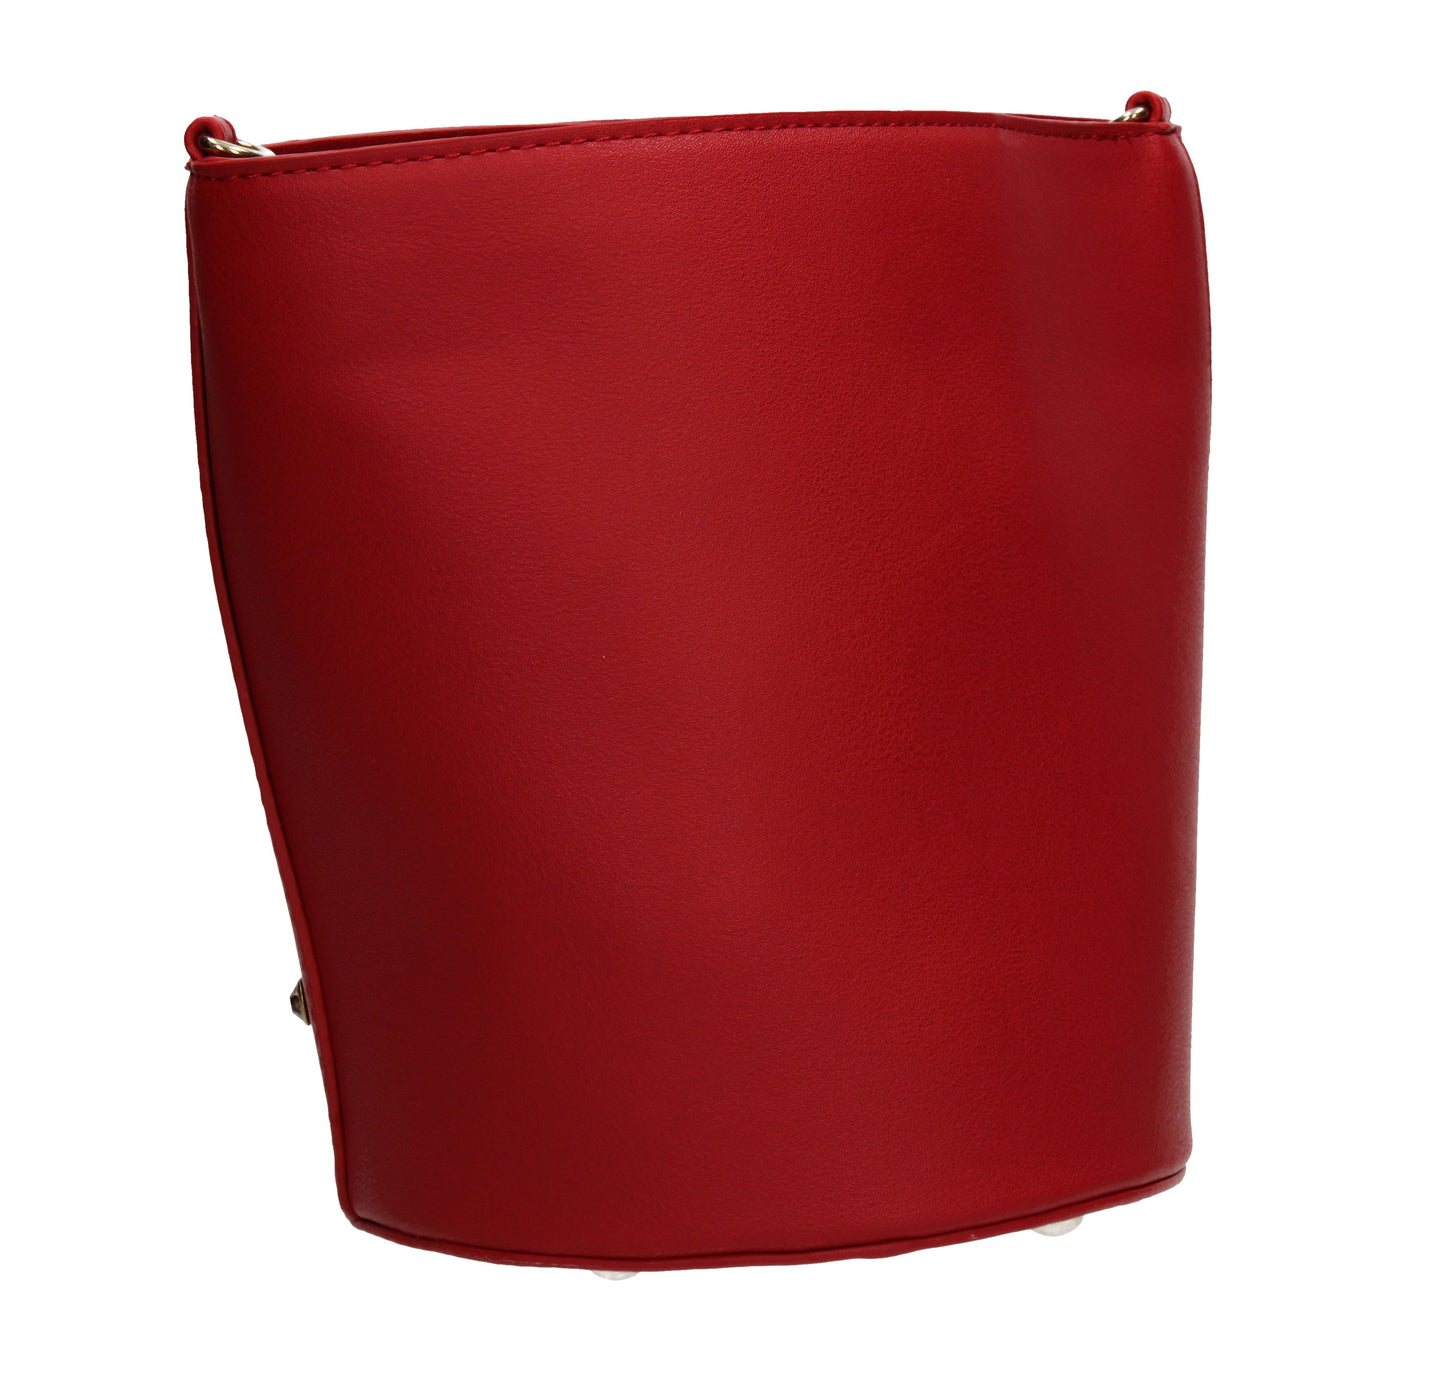 Elley Studs & Bee Bucket Crossbody Bag Red